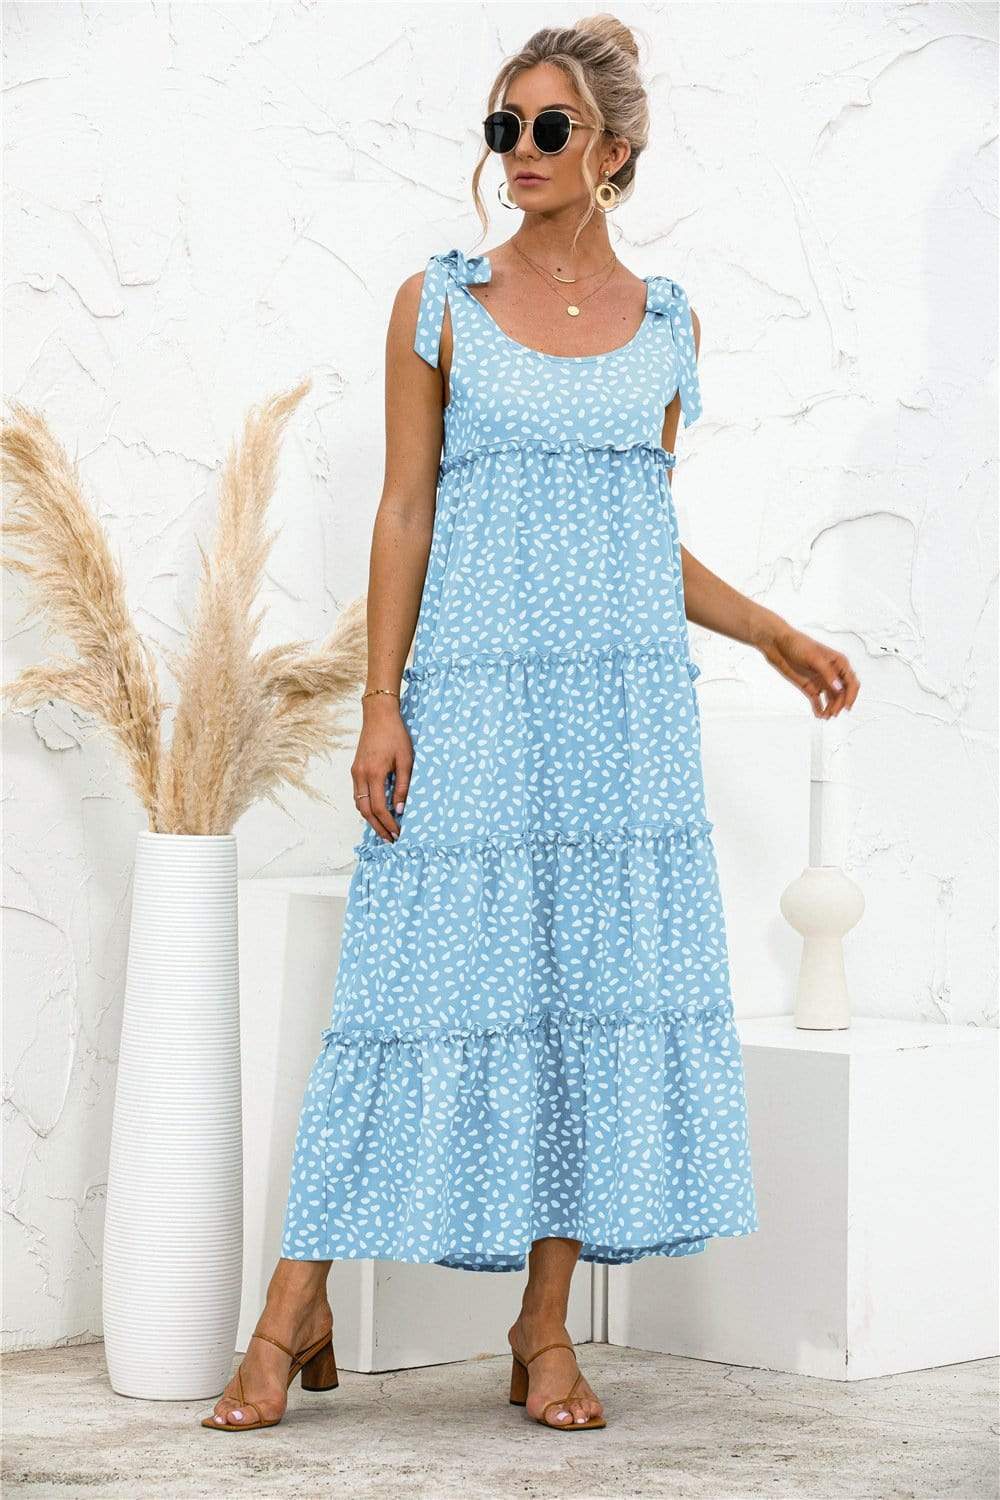 Casual Dresses - Polka Dot Adjustable Straps Tiered Dress - Jenston Girl (7037995057339)